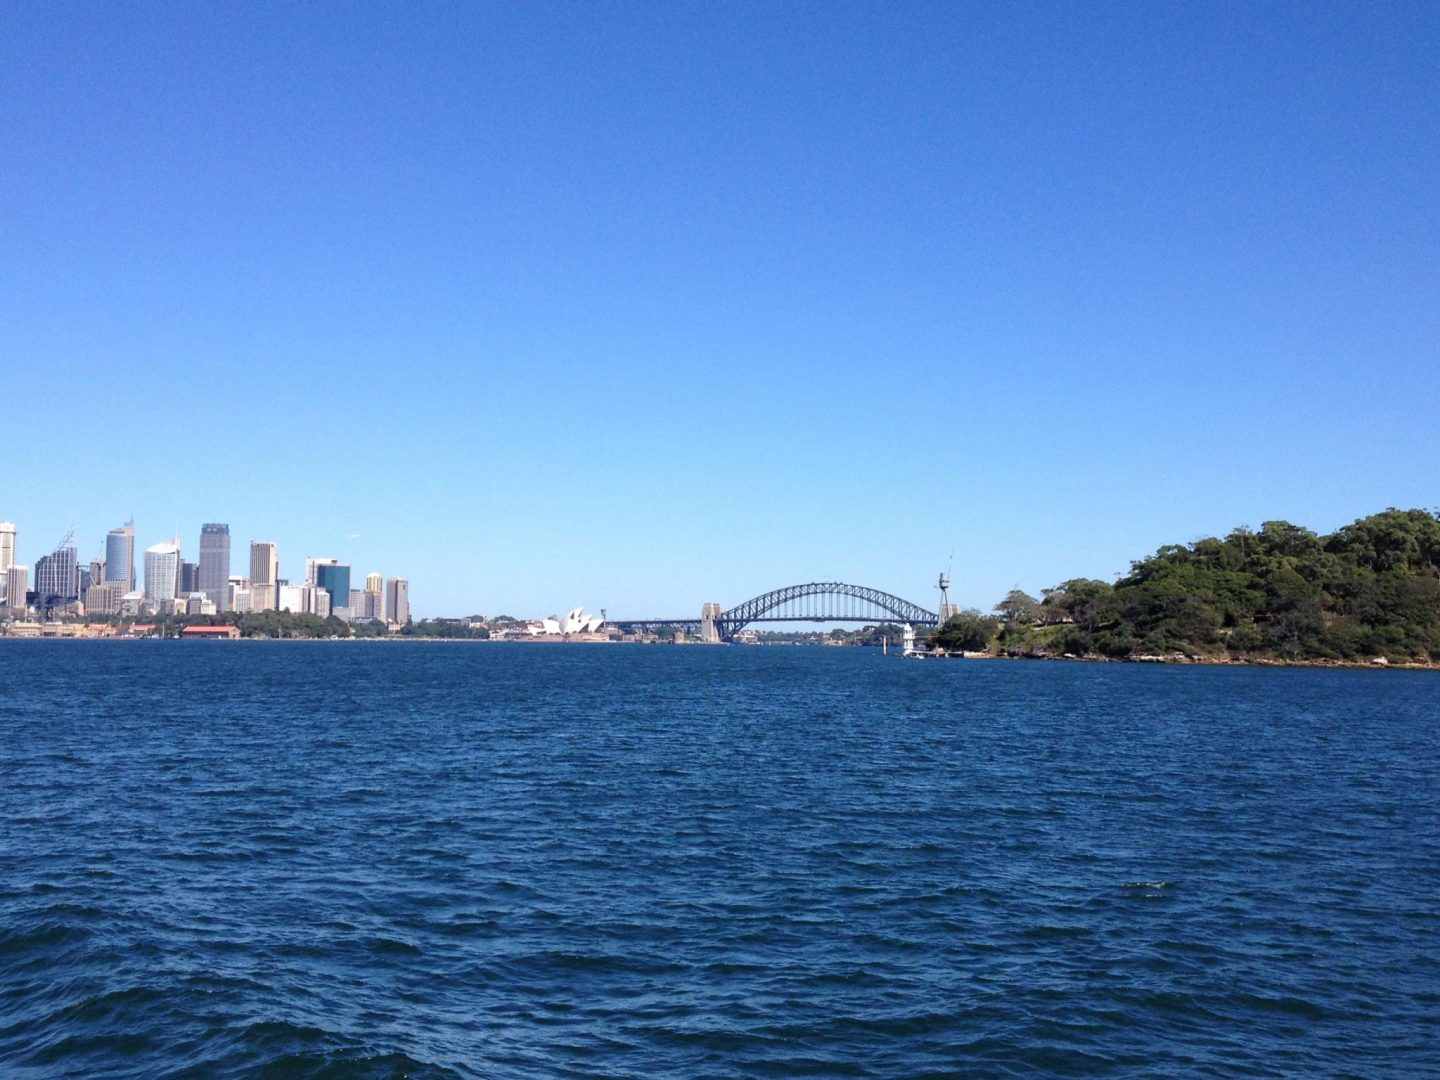 Sydney Harbour Bridge from the ferry